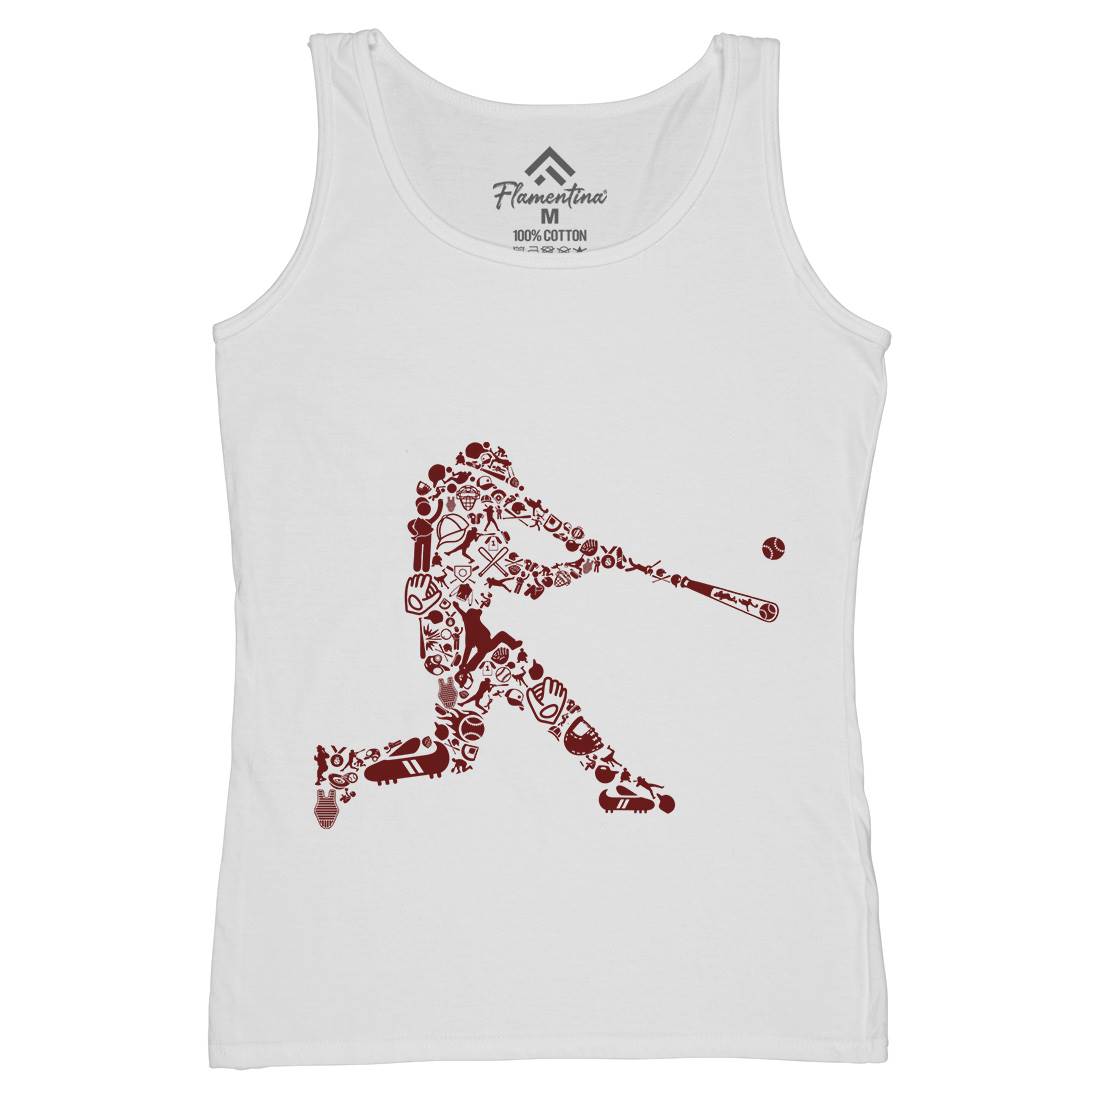 Baseball Player Womens Organic Tank Top Vest Sport B007